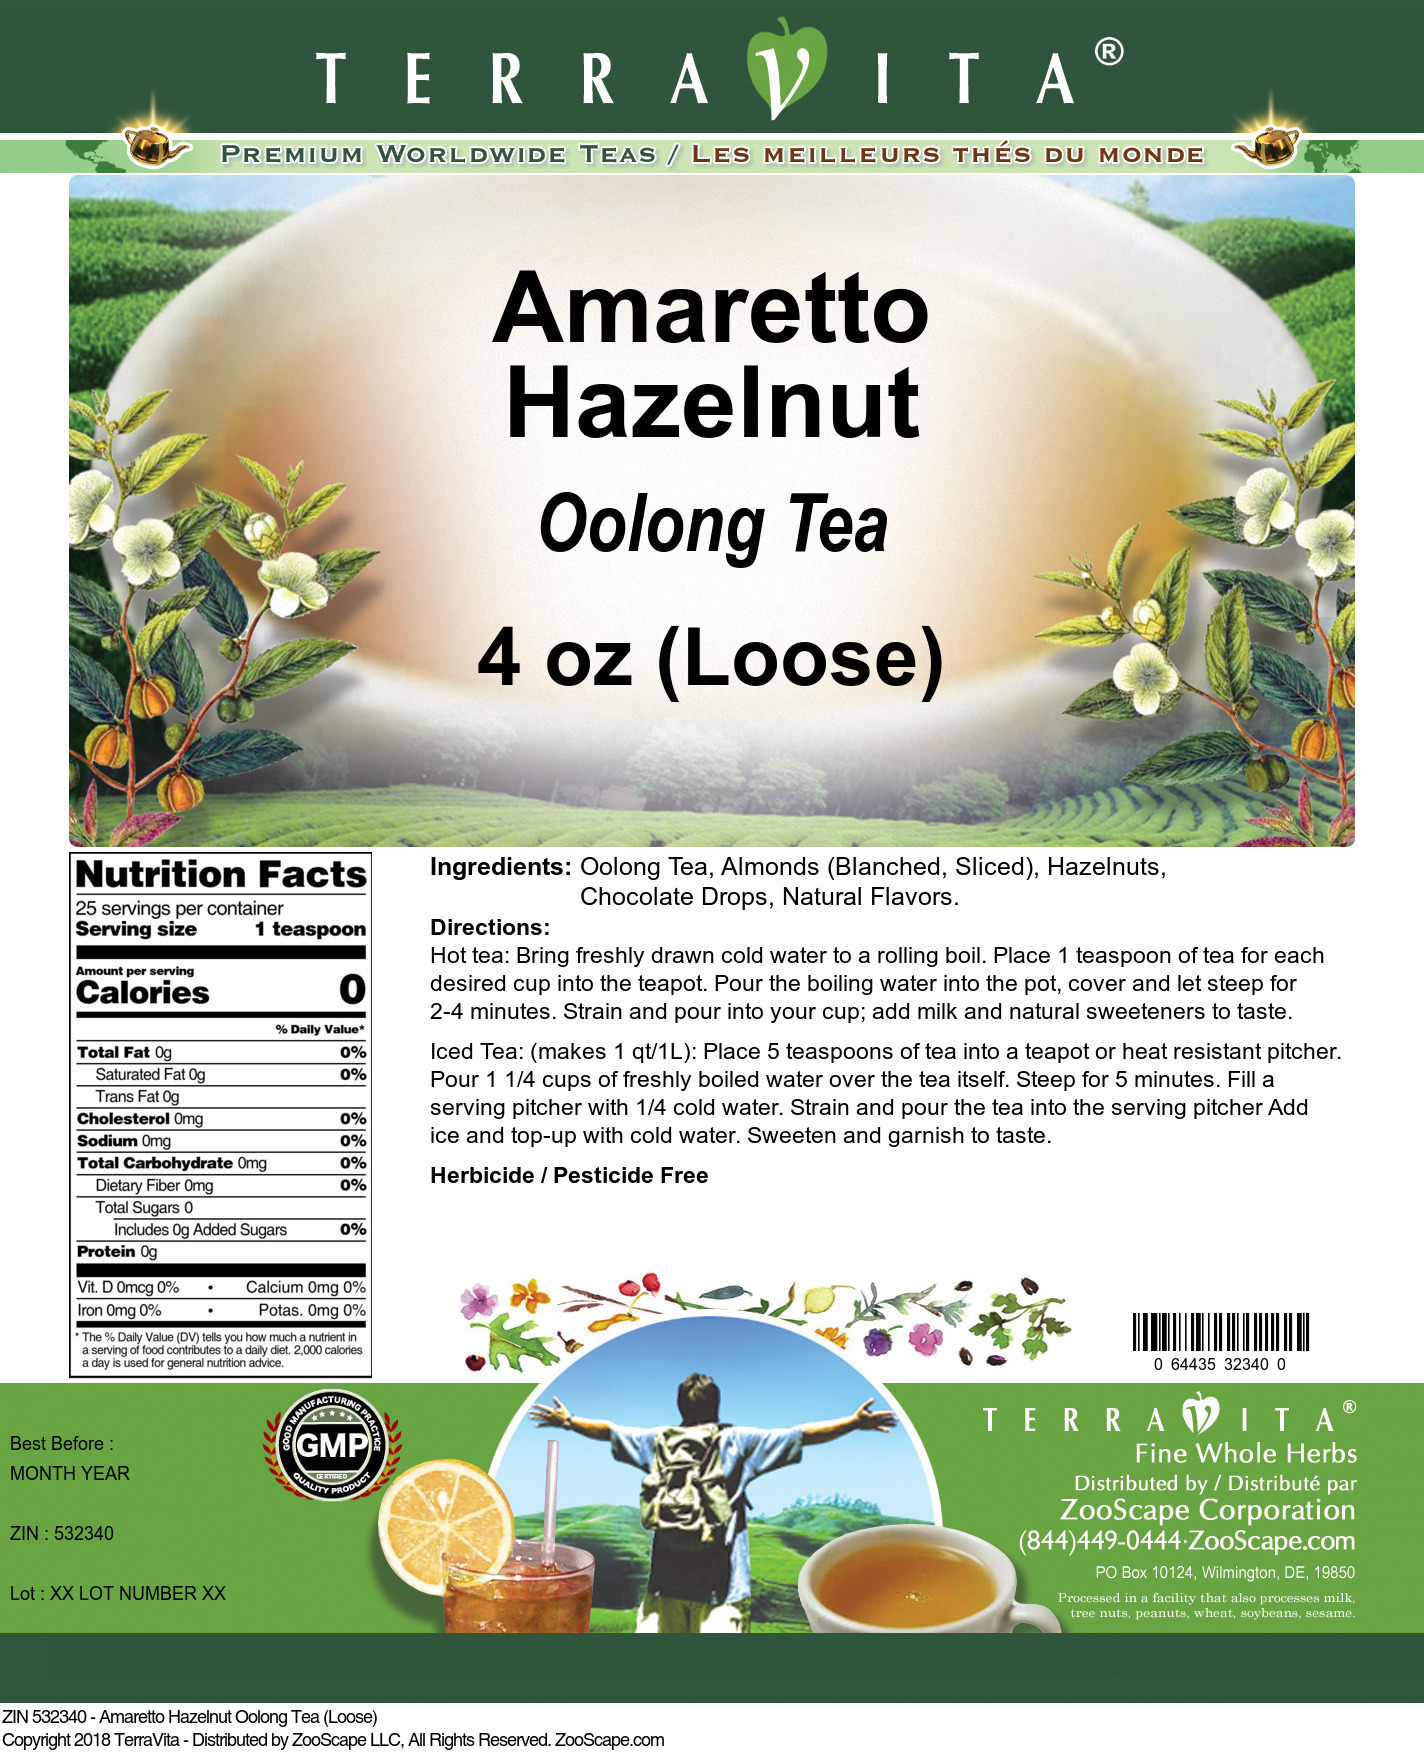 Amaretto Hazelnut Oolong Tea (Loose) - Label